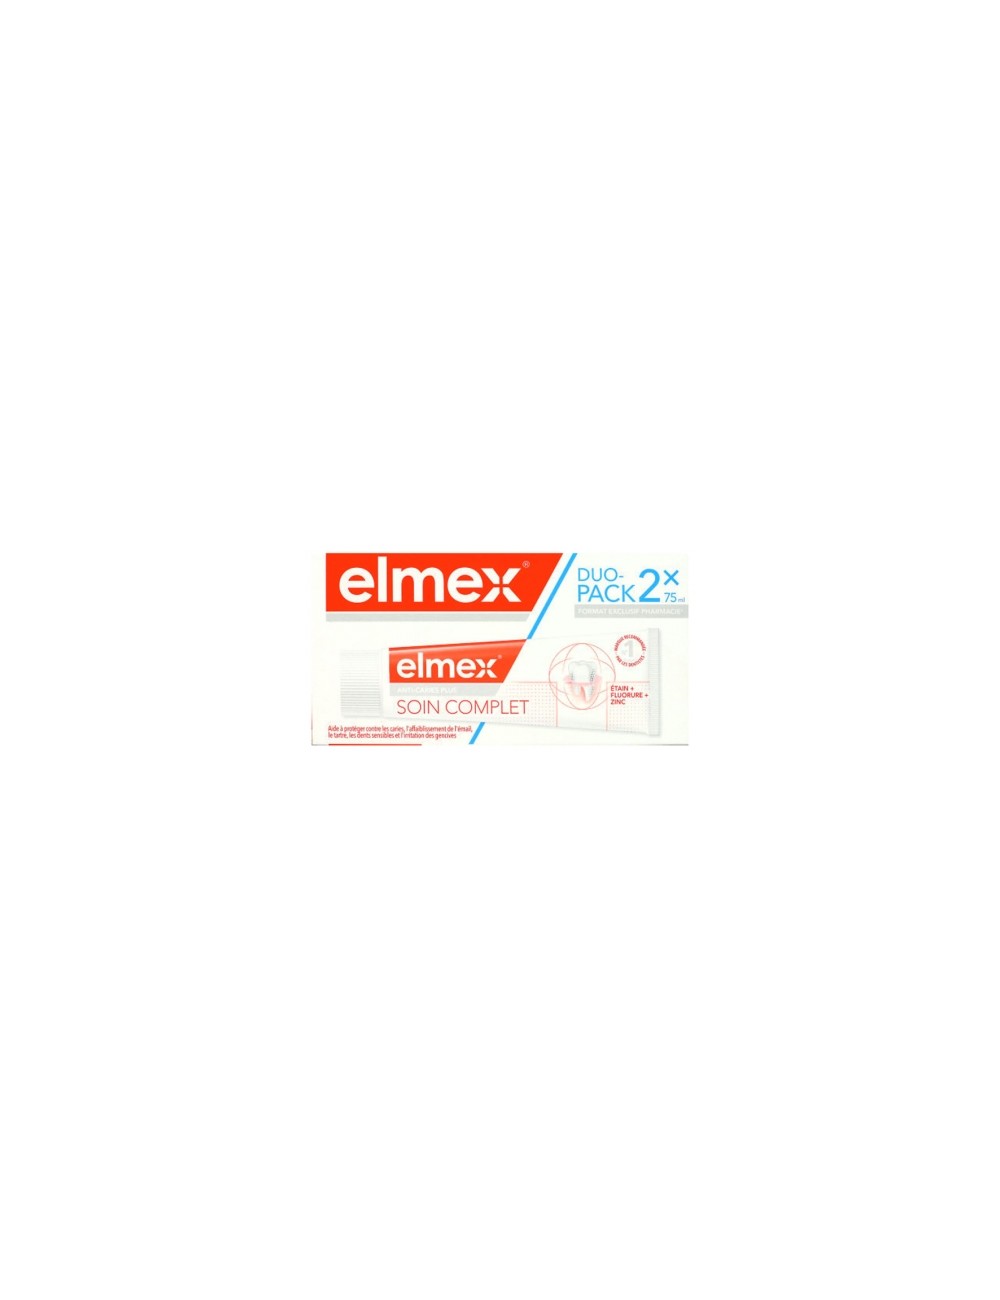 Elmex Dentifrice Tubes de Voyage 2 x 12 ml